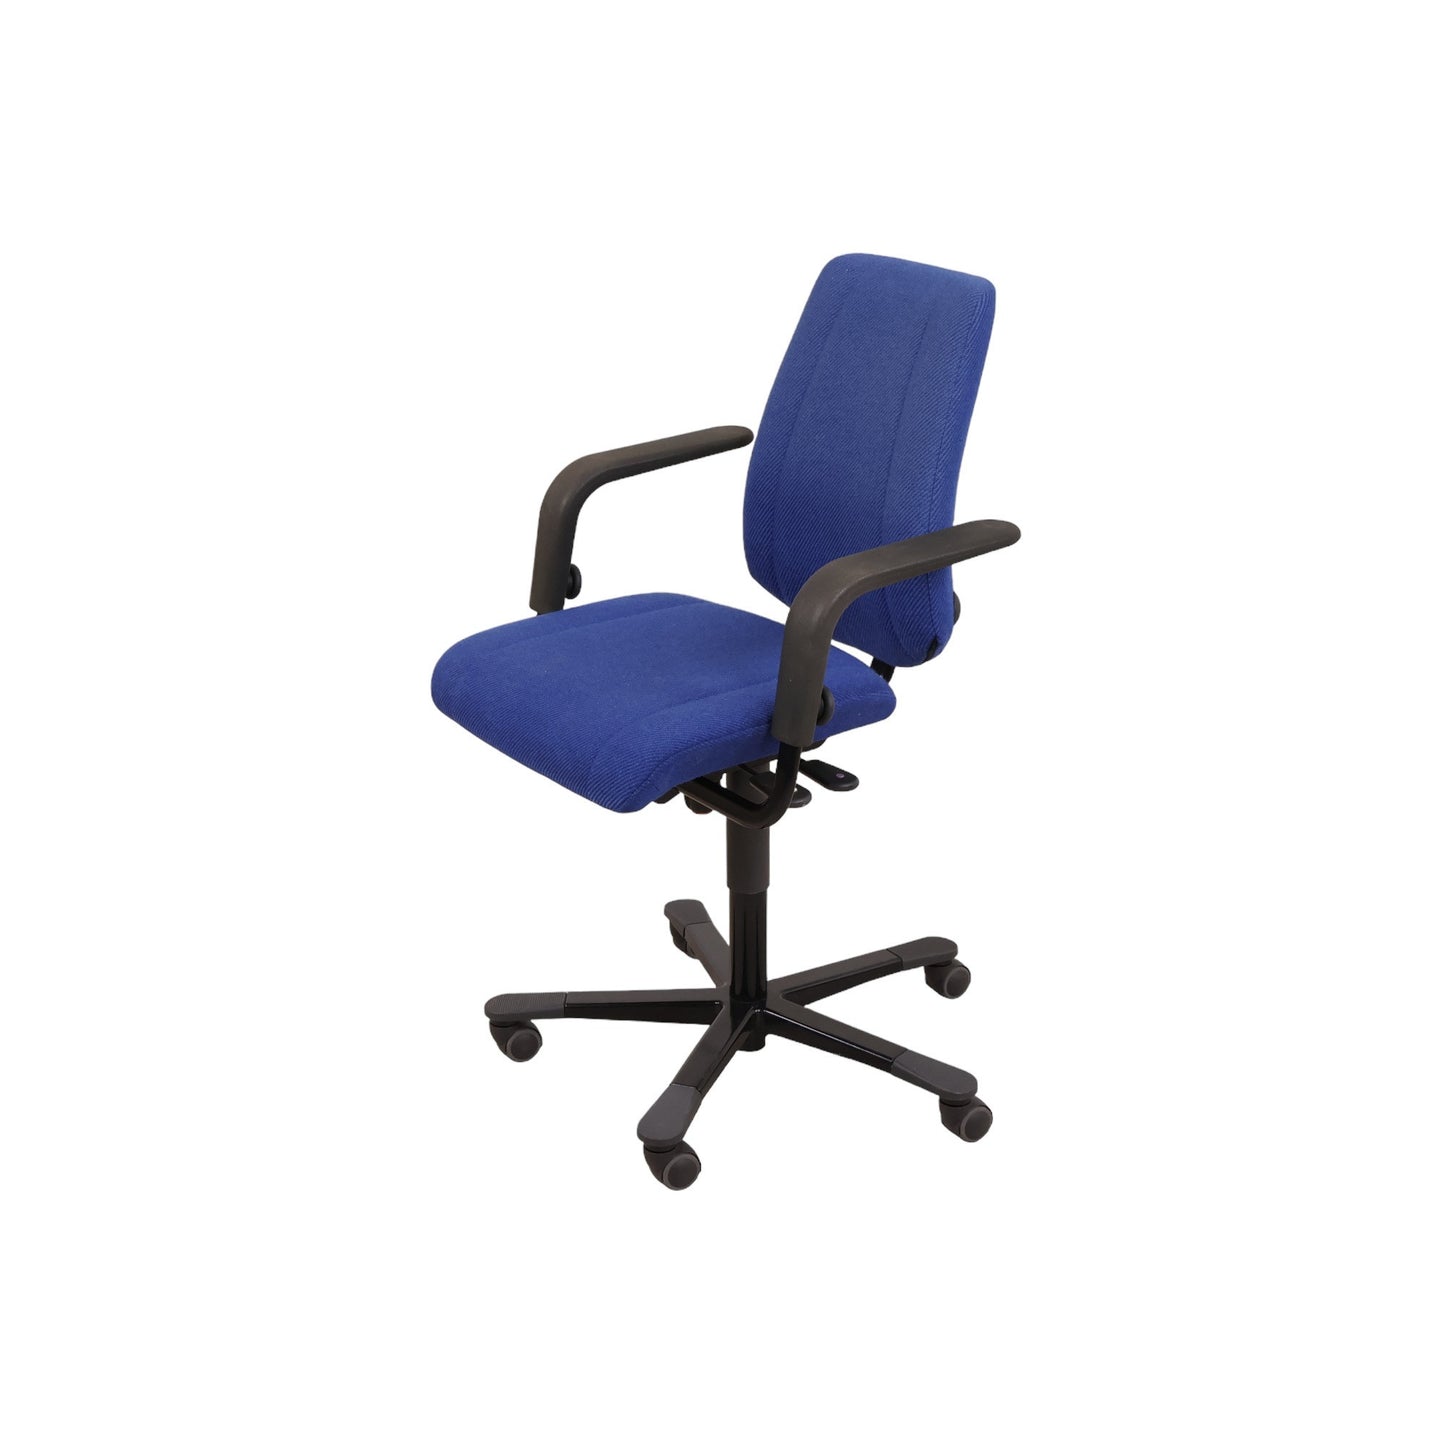 Håg kontorstol i fargen blå